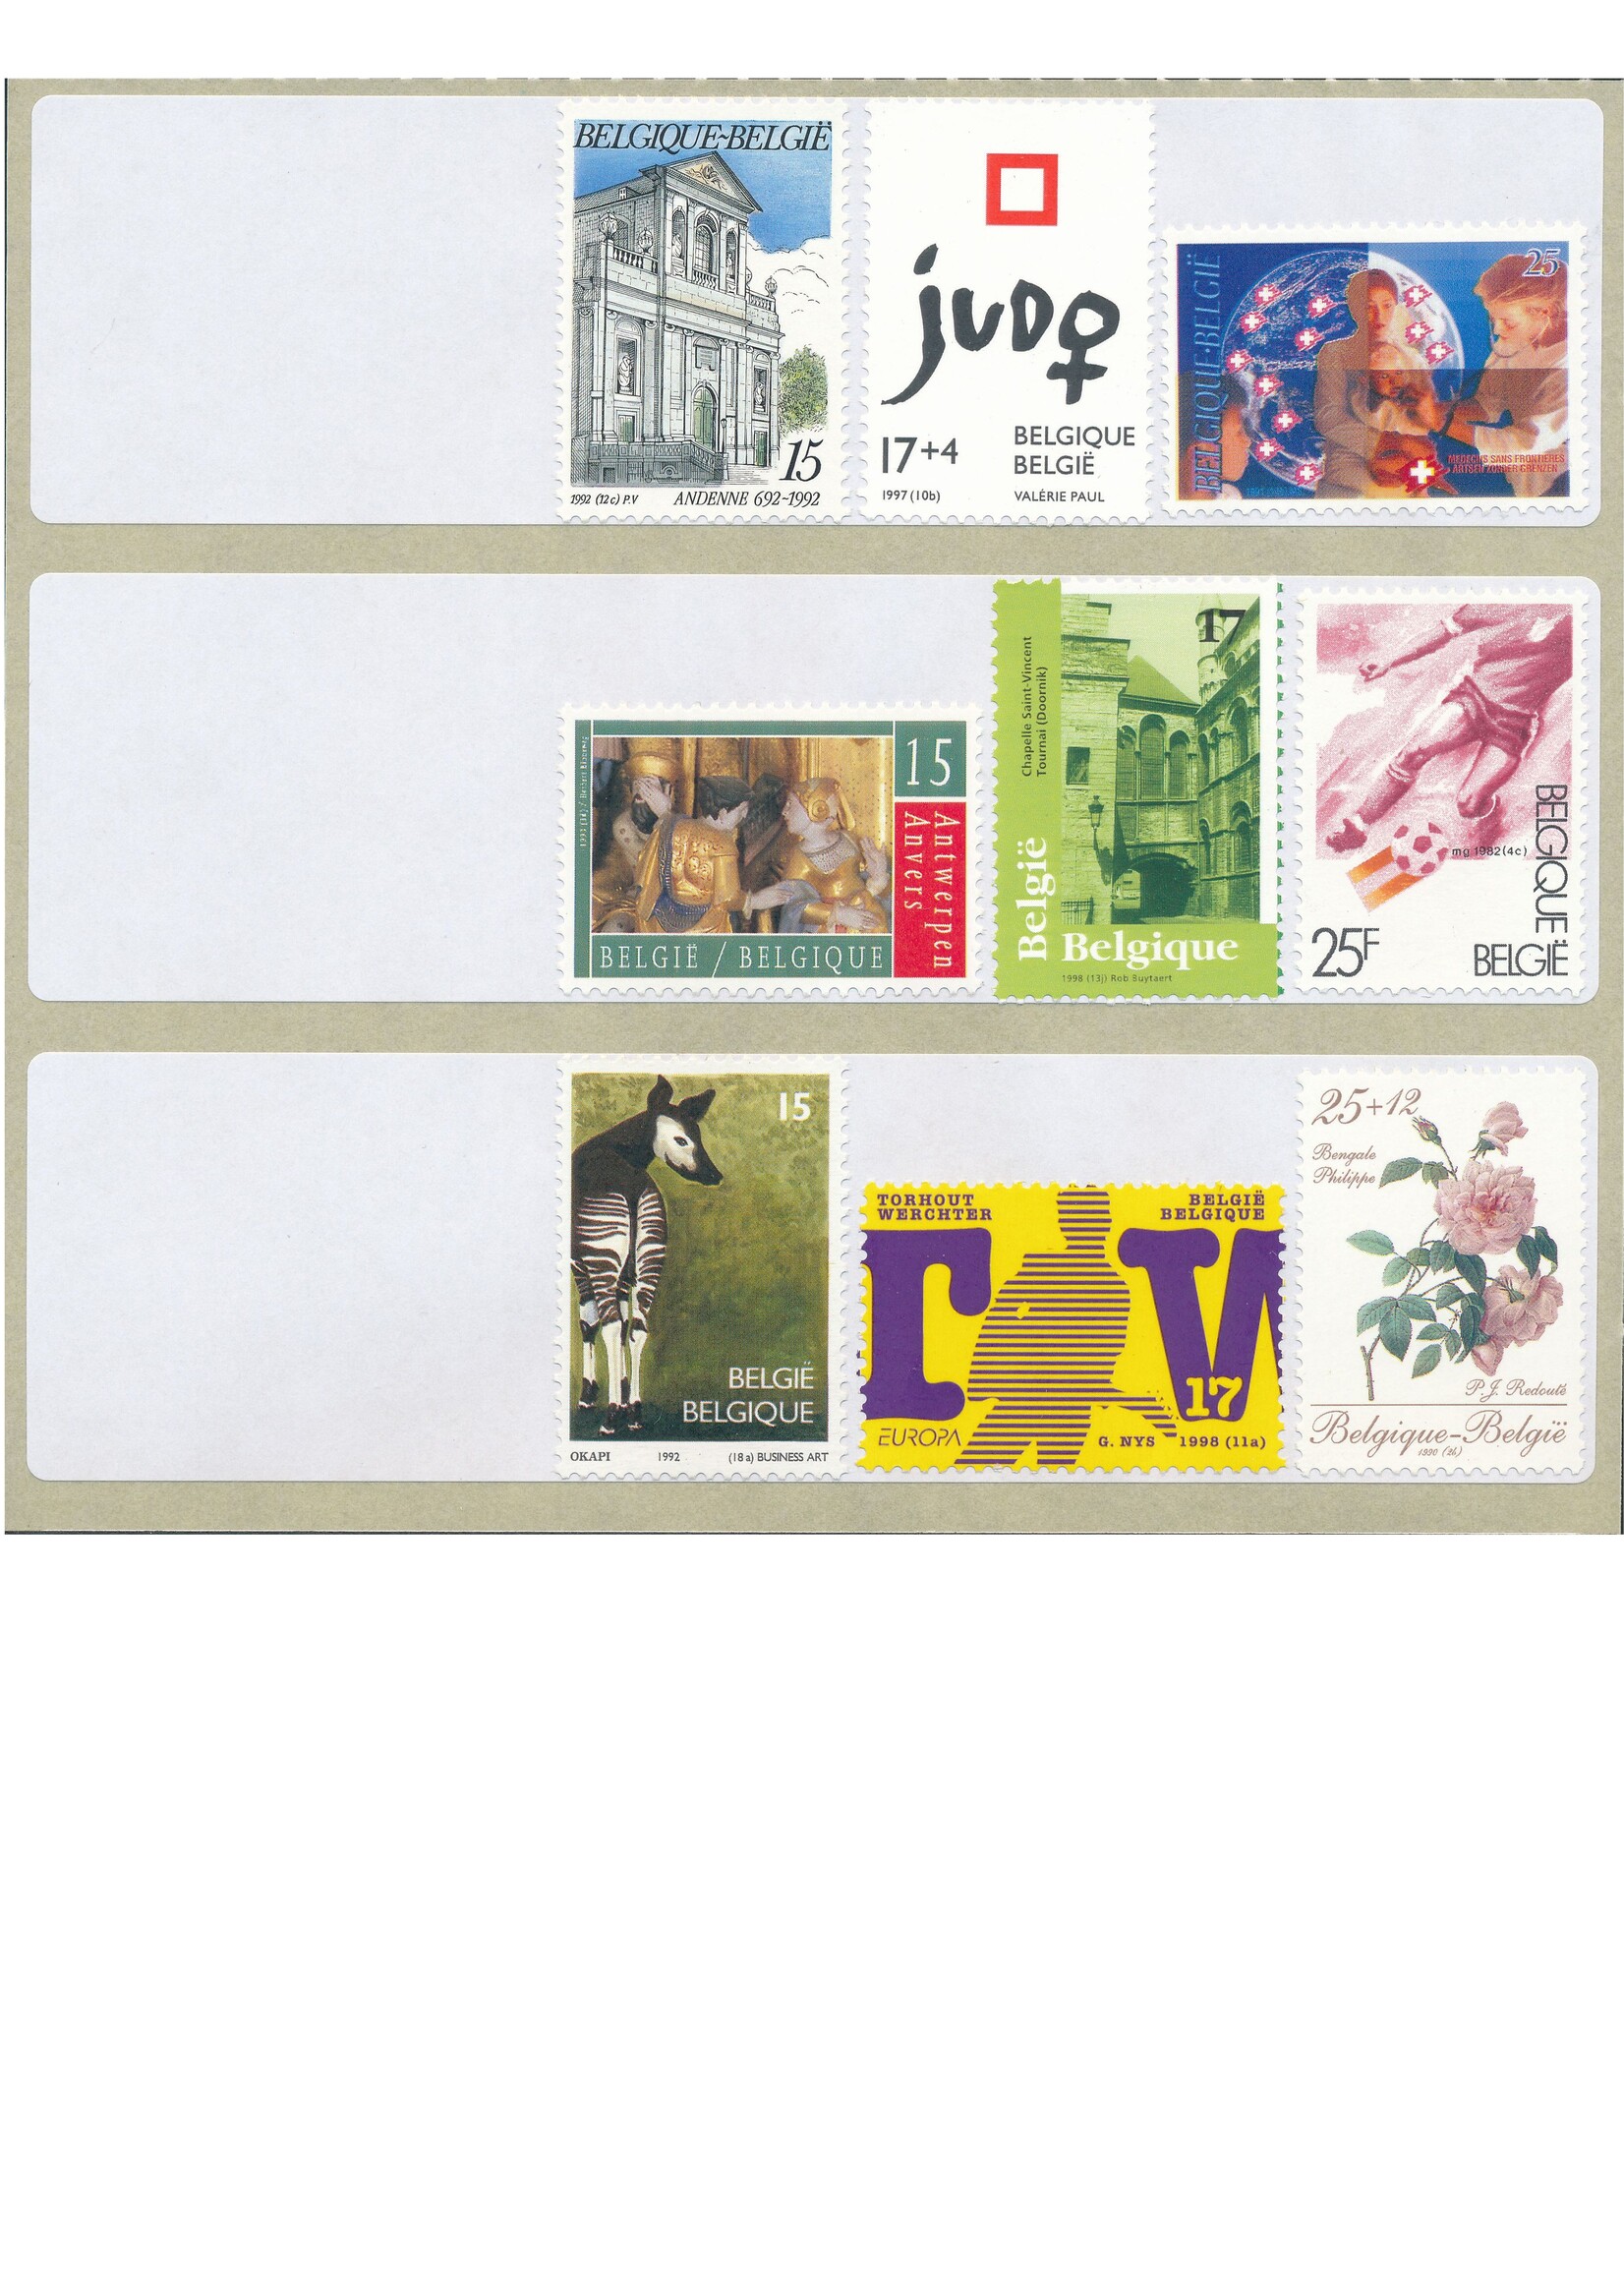 Testpakket - Postzegel-etiketten (3 stuks) - Tarief 1, België